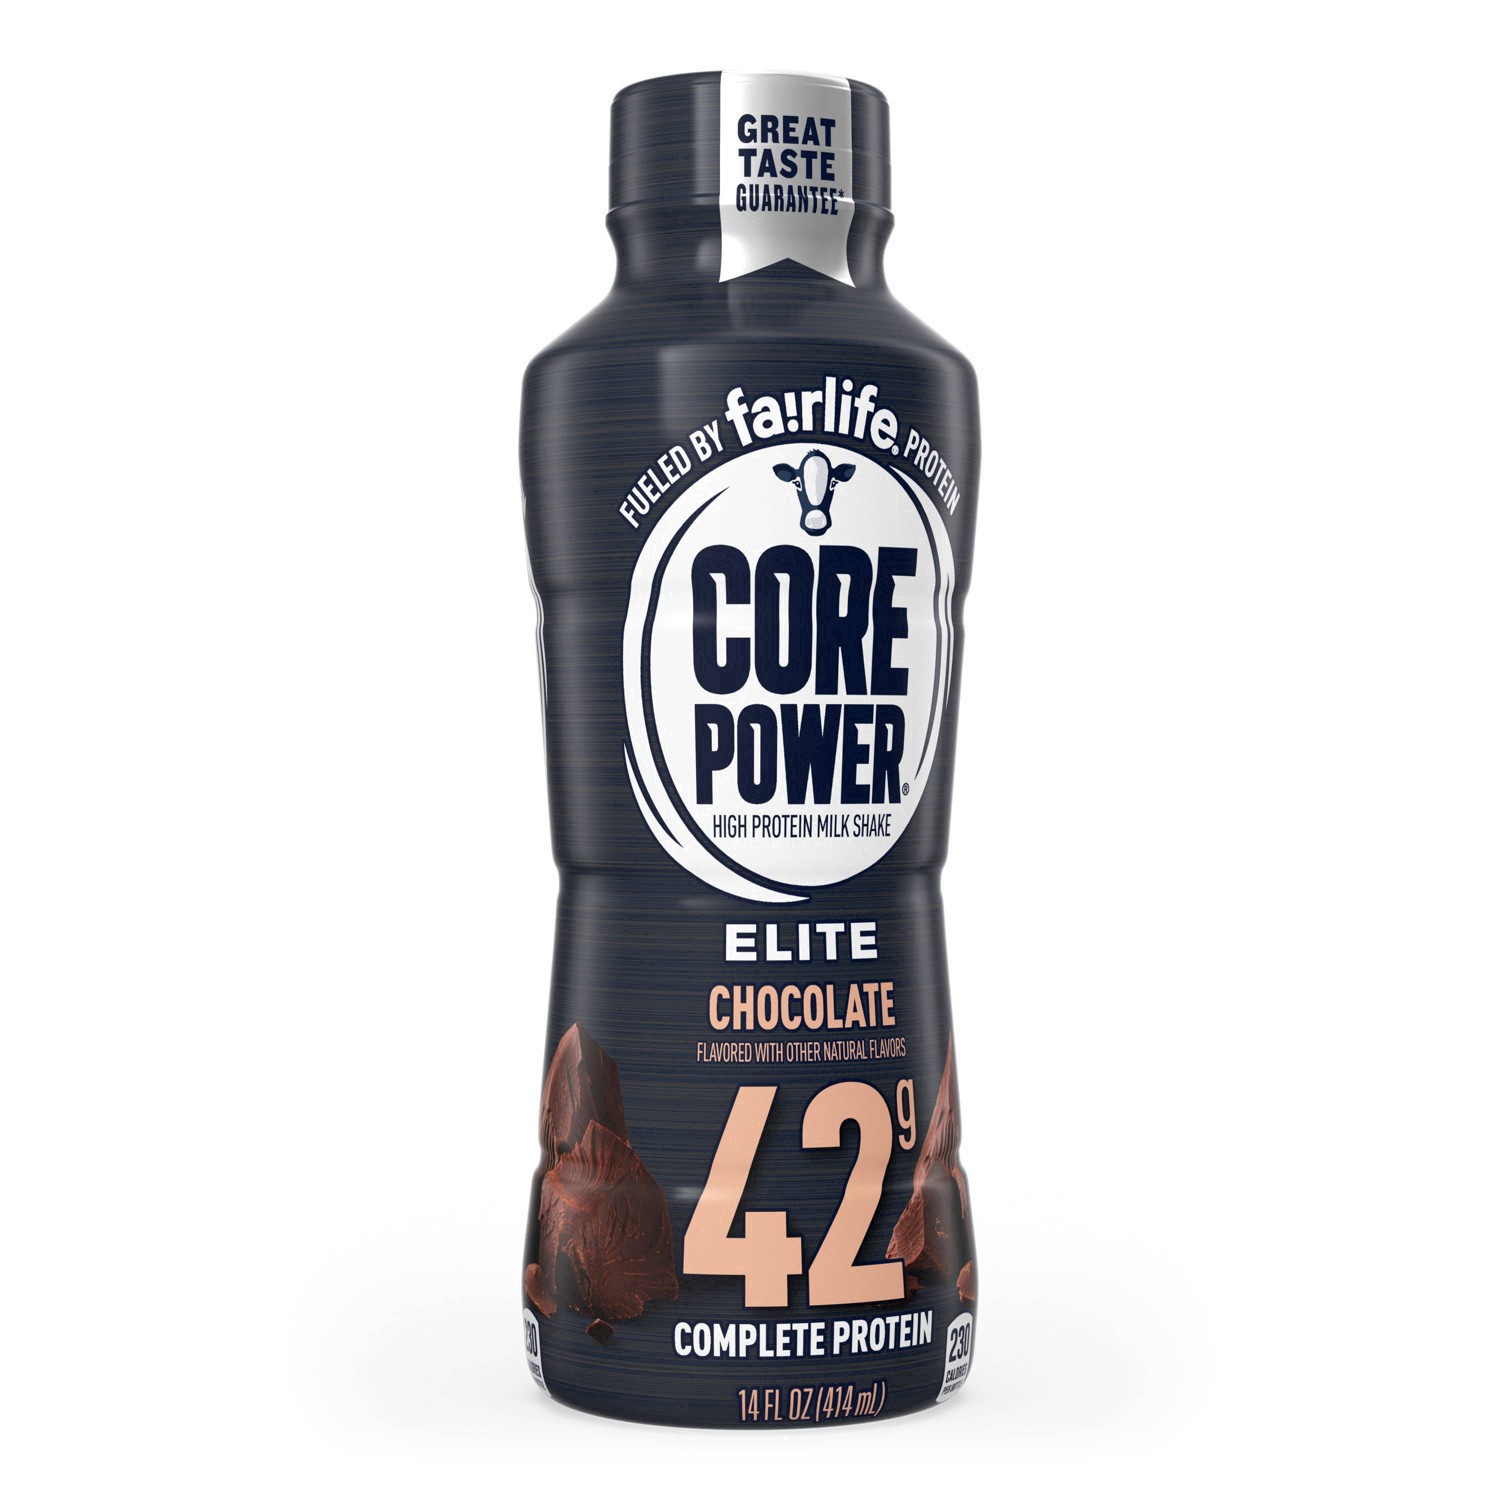 slide 5 of 106, Core Power Elite High Protein Chocolate Milk Shake 14 fl oz, 42 gram, 14 oz